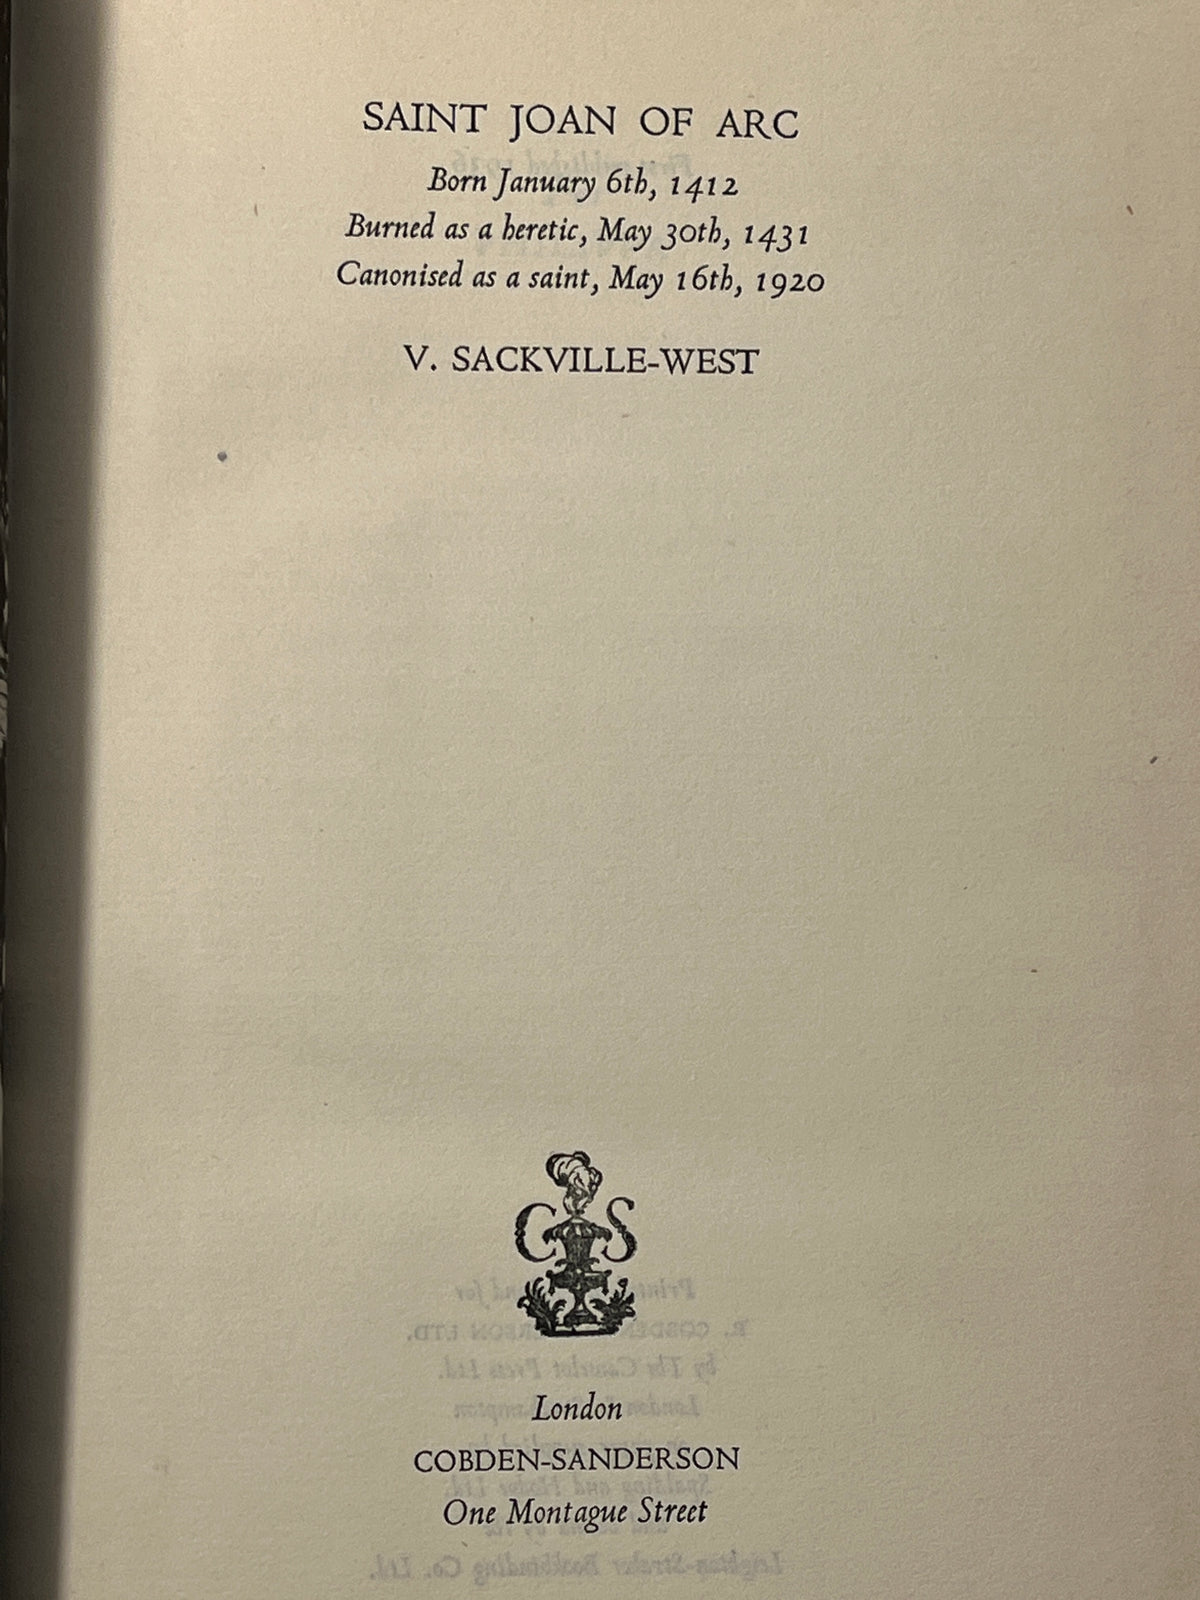 V. Sackville-West, Saint Joan of Arc, 1936, 1st ed. Very Good+ HC